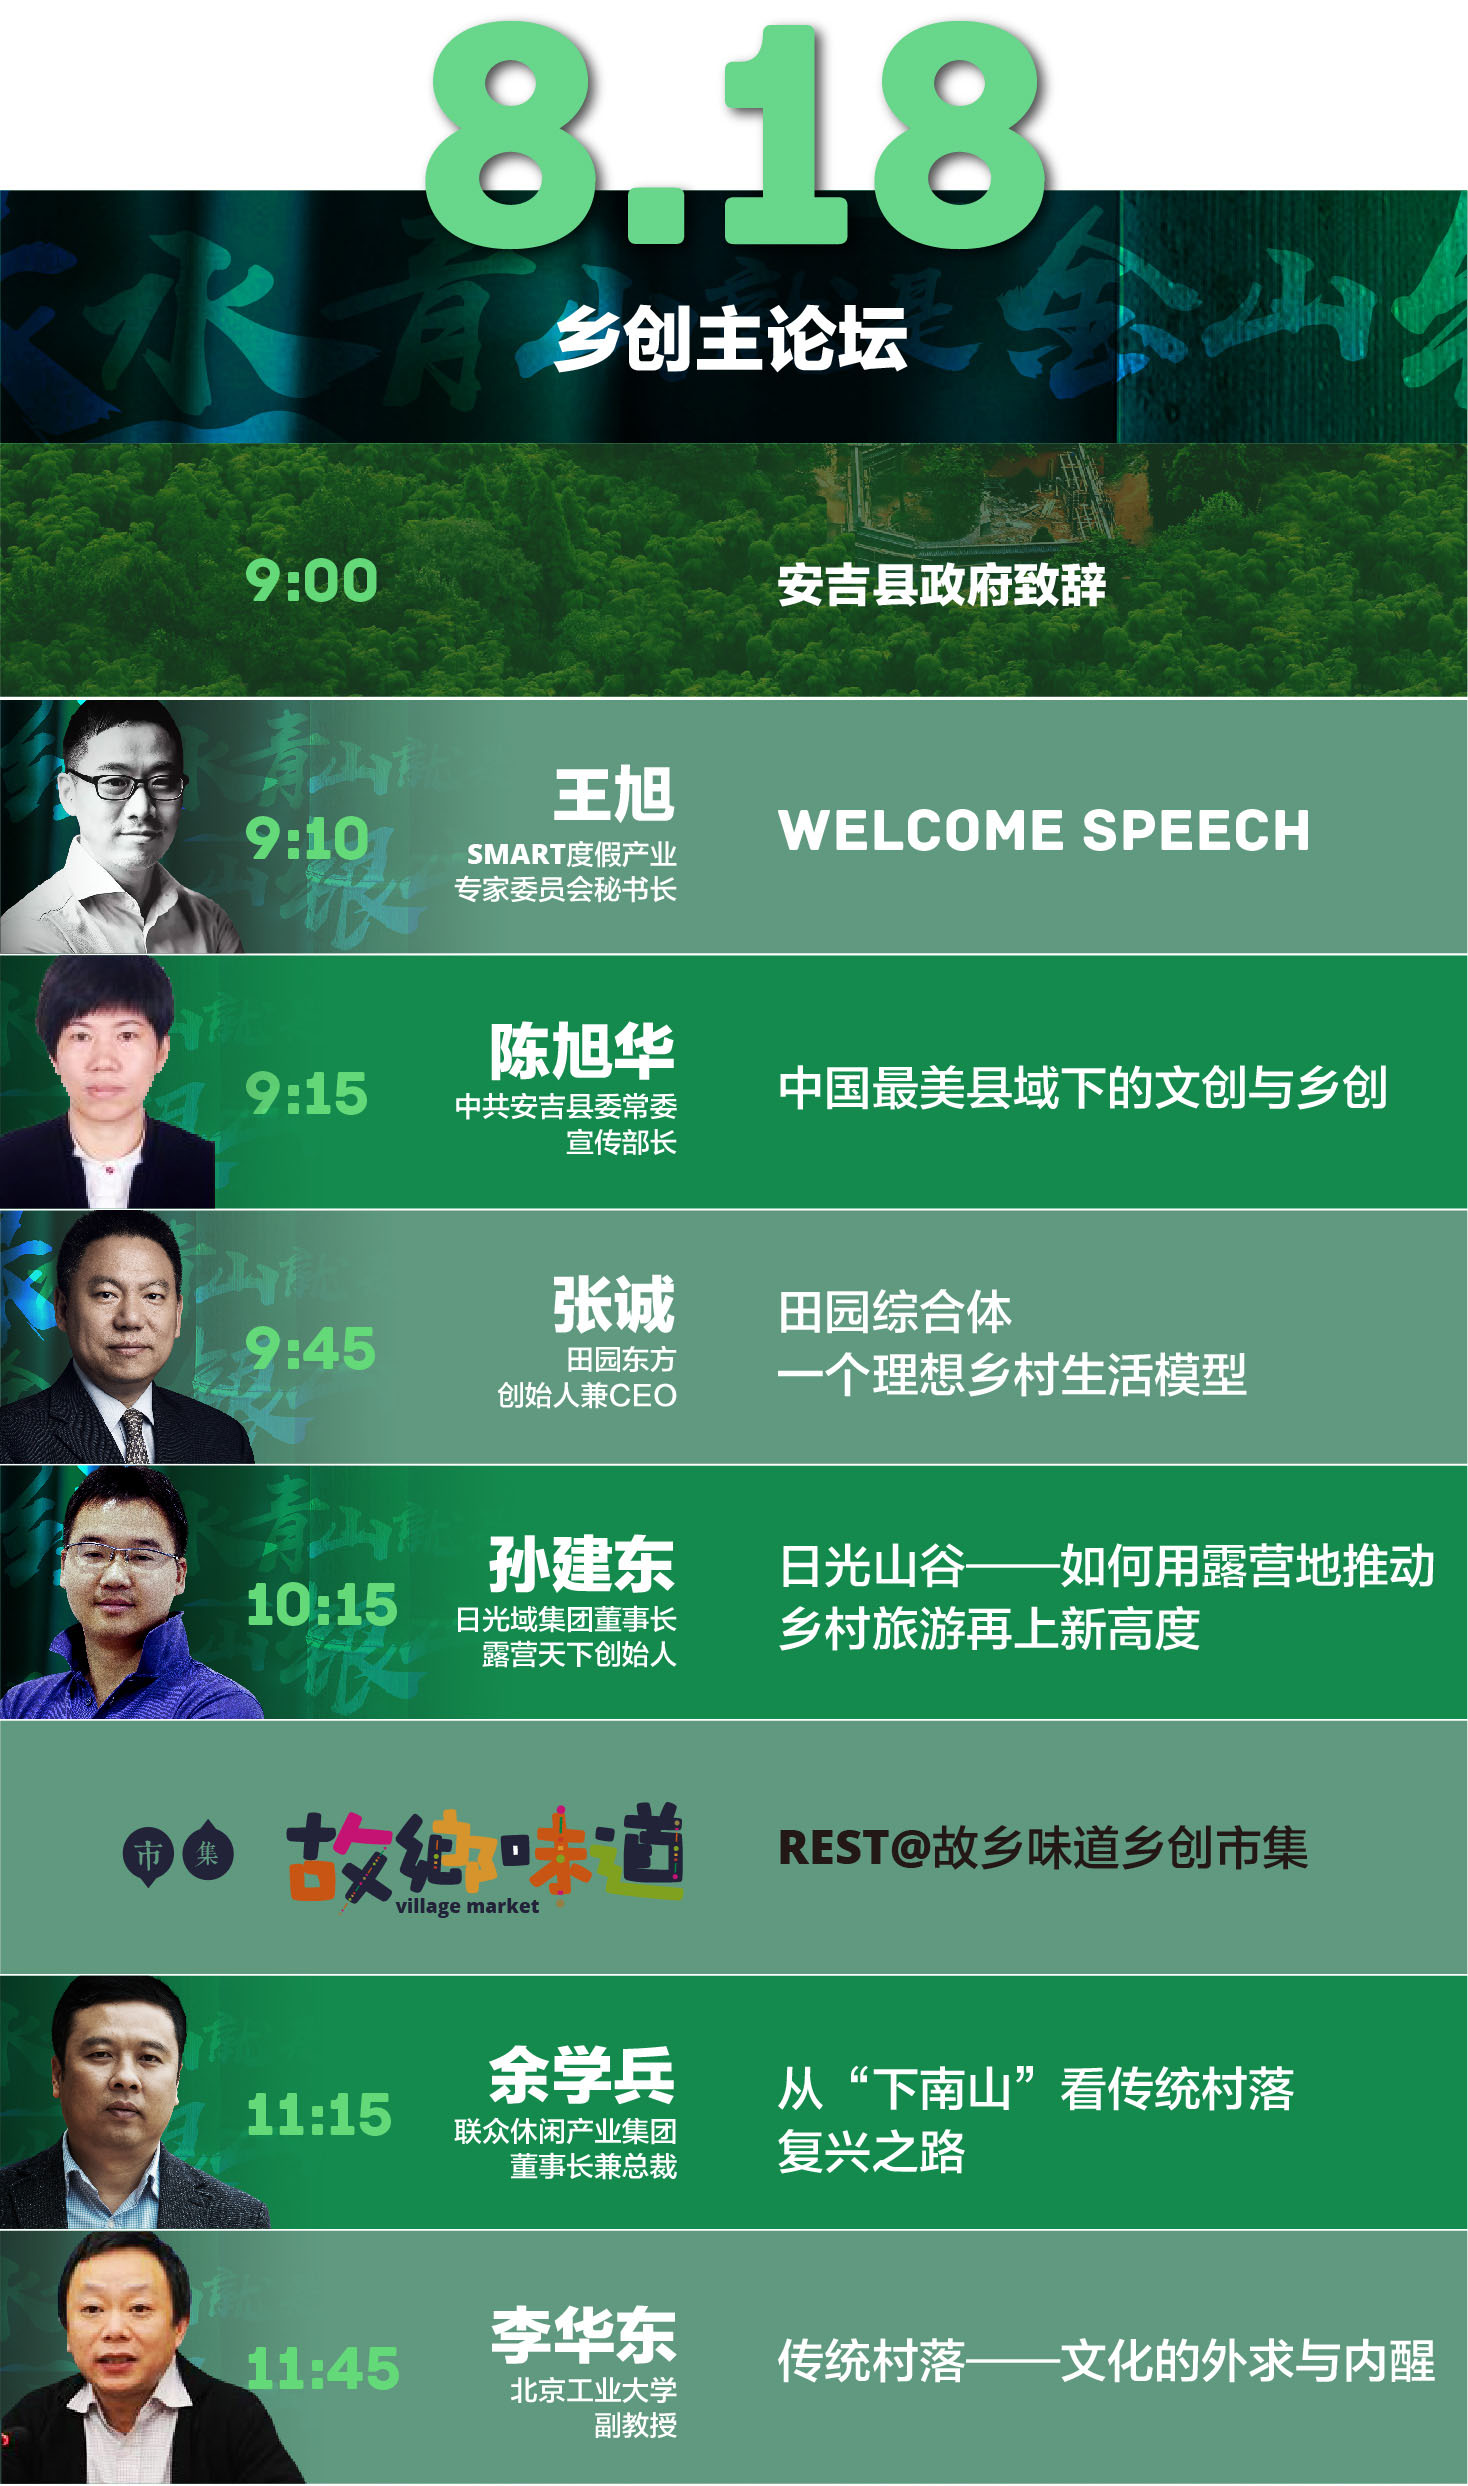 SMART•中国最美县域安吉国际乡创峰会